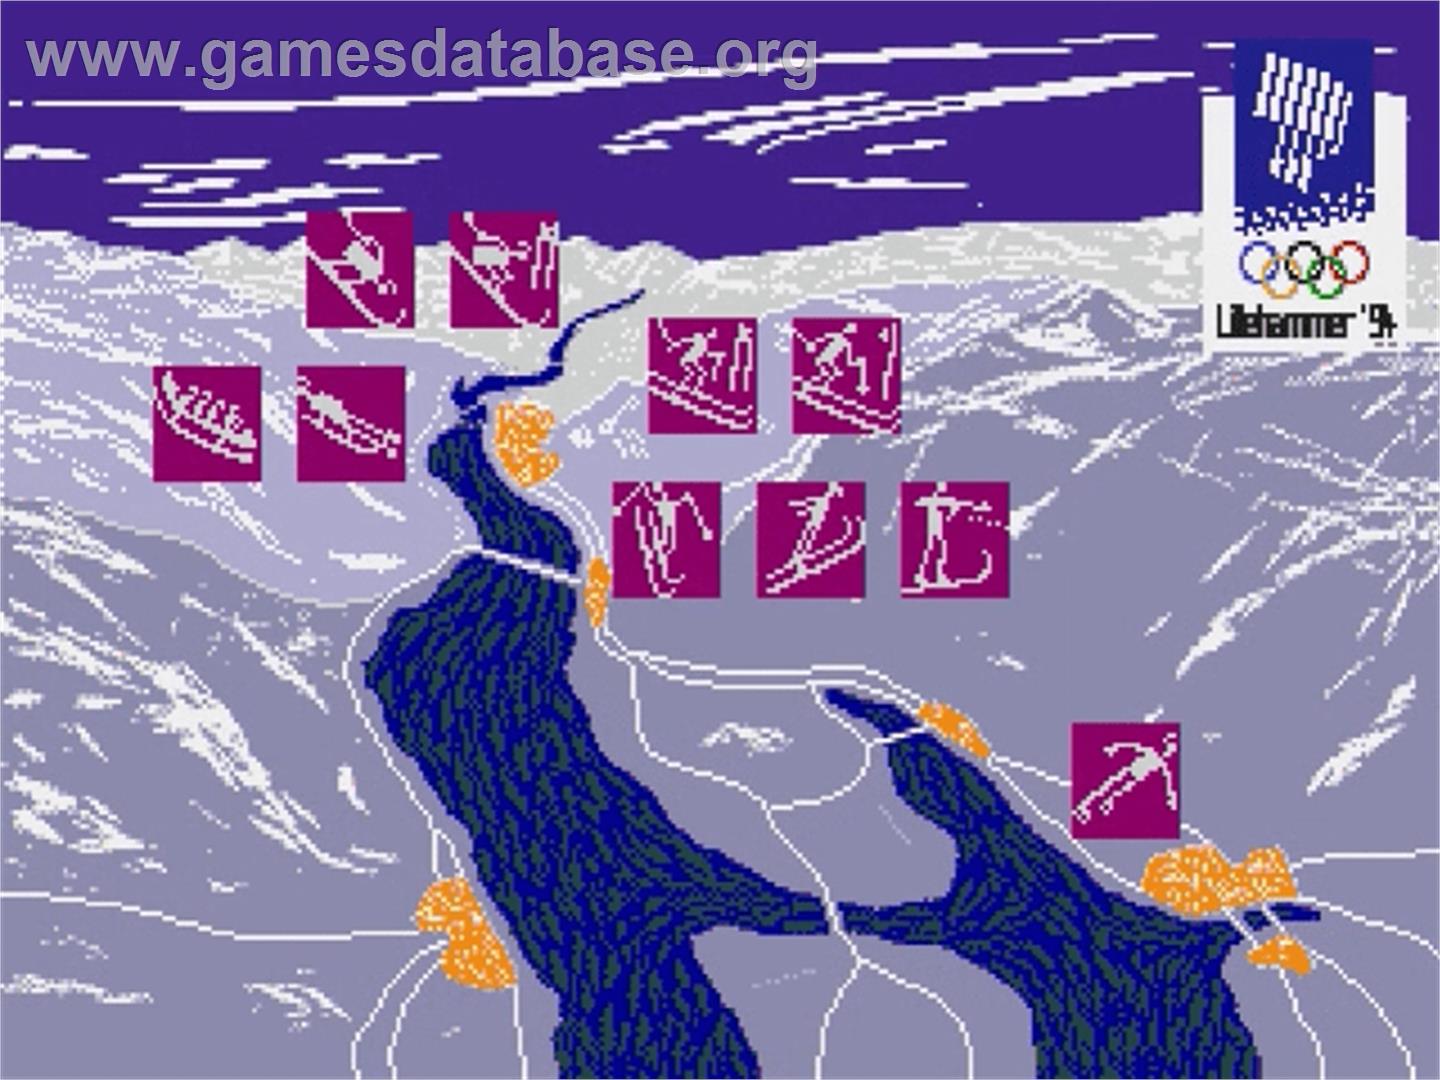 Winter Olympics: Lillehammer '94 - Sega Genesis - Artwork - Title Screen